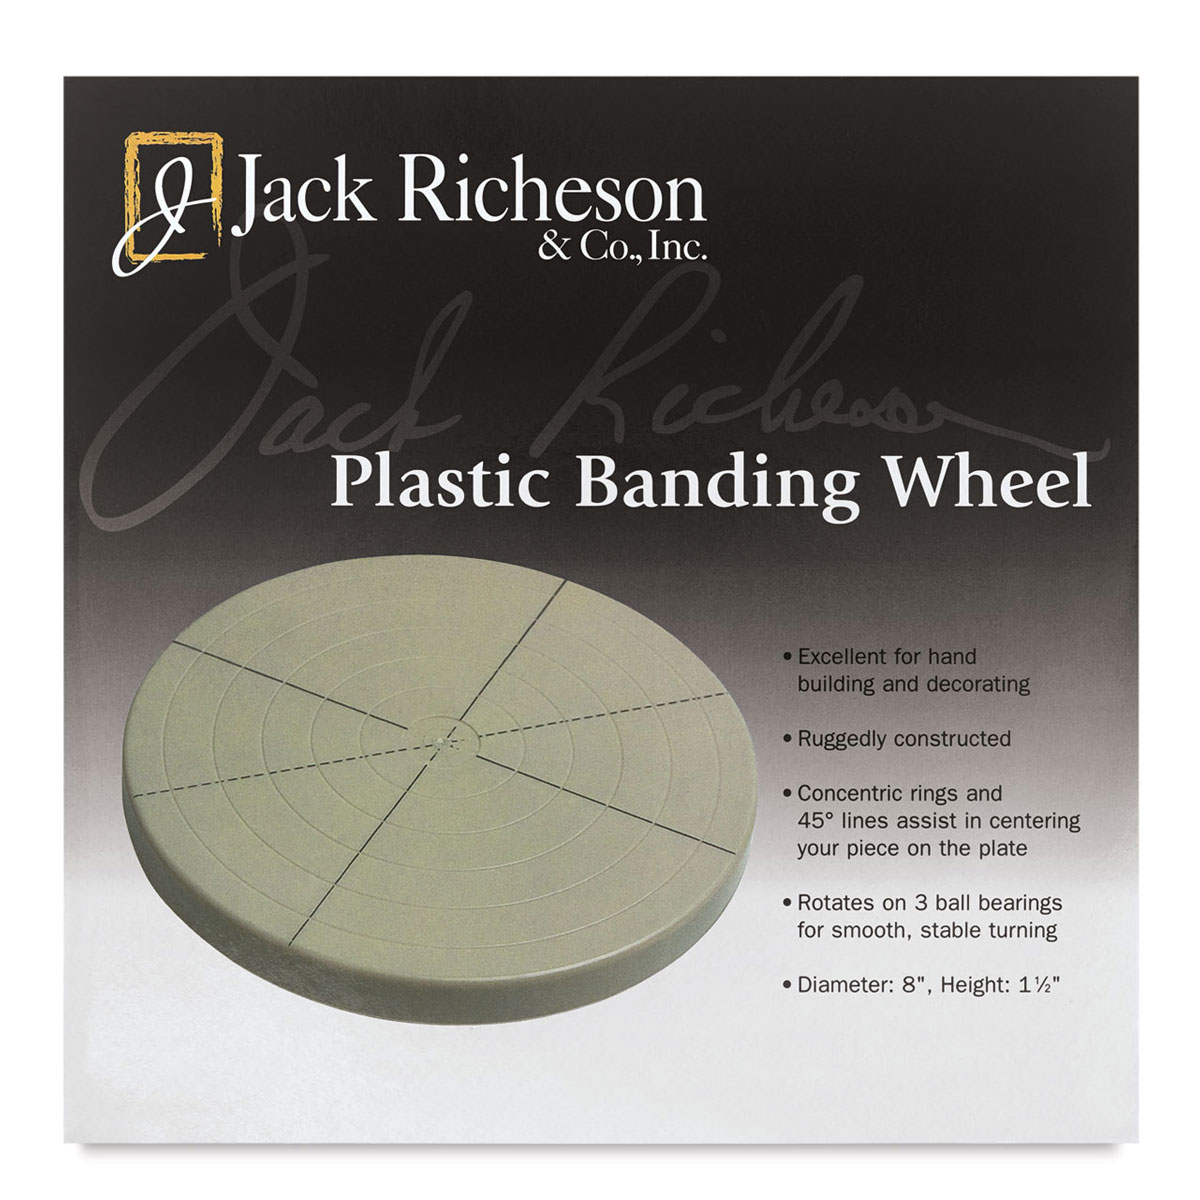 Richeson Plastic Banding Wheel